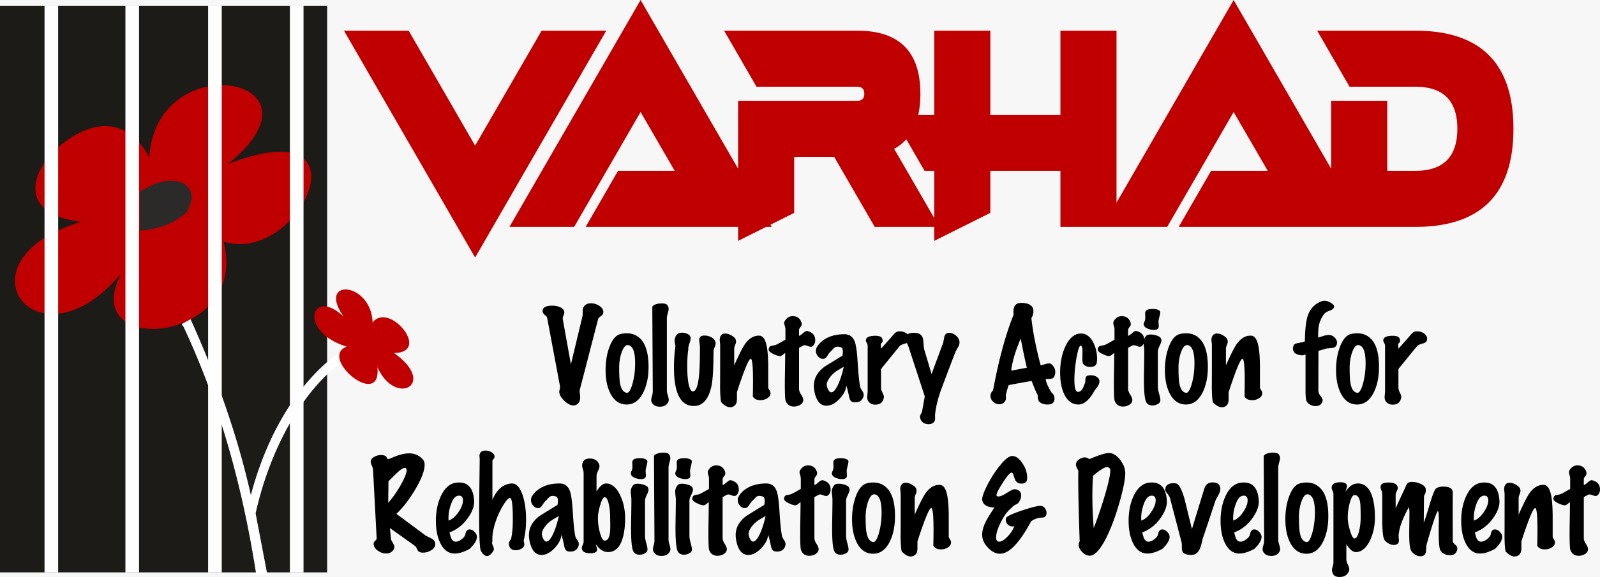 Voluntary Action for Rehabilitation and Development (VARHAD) logo